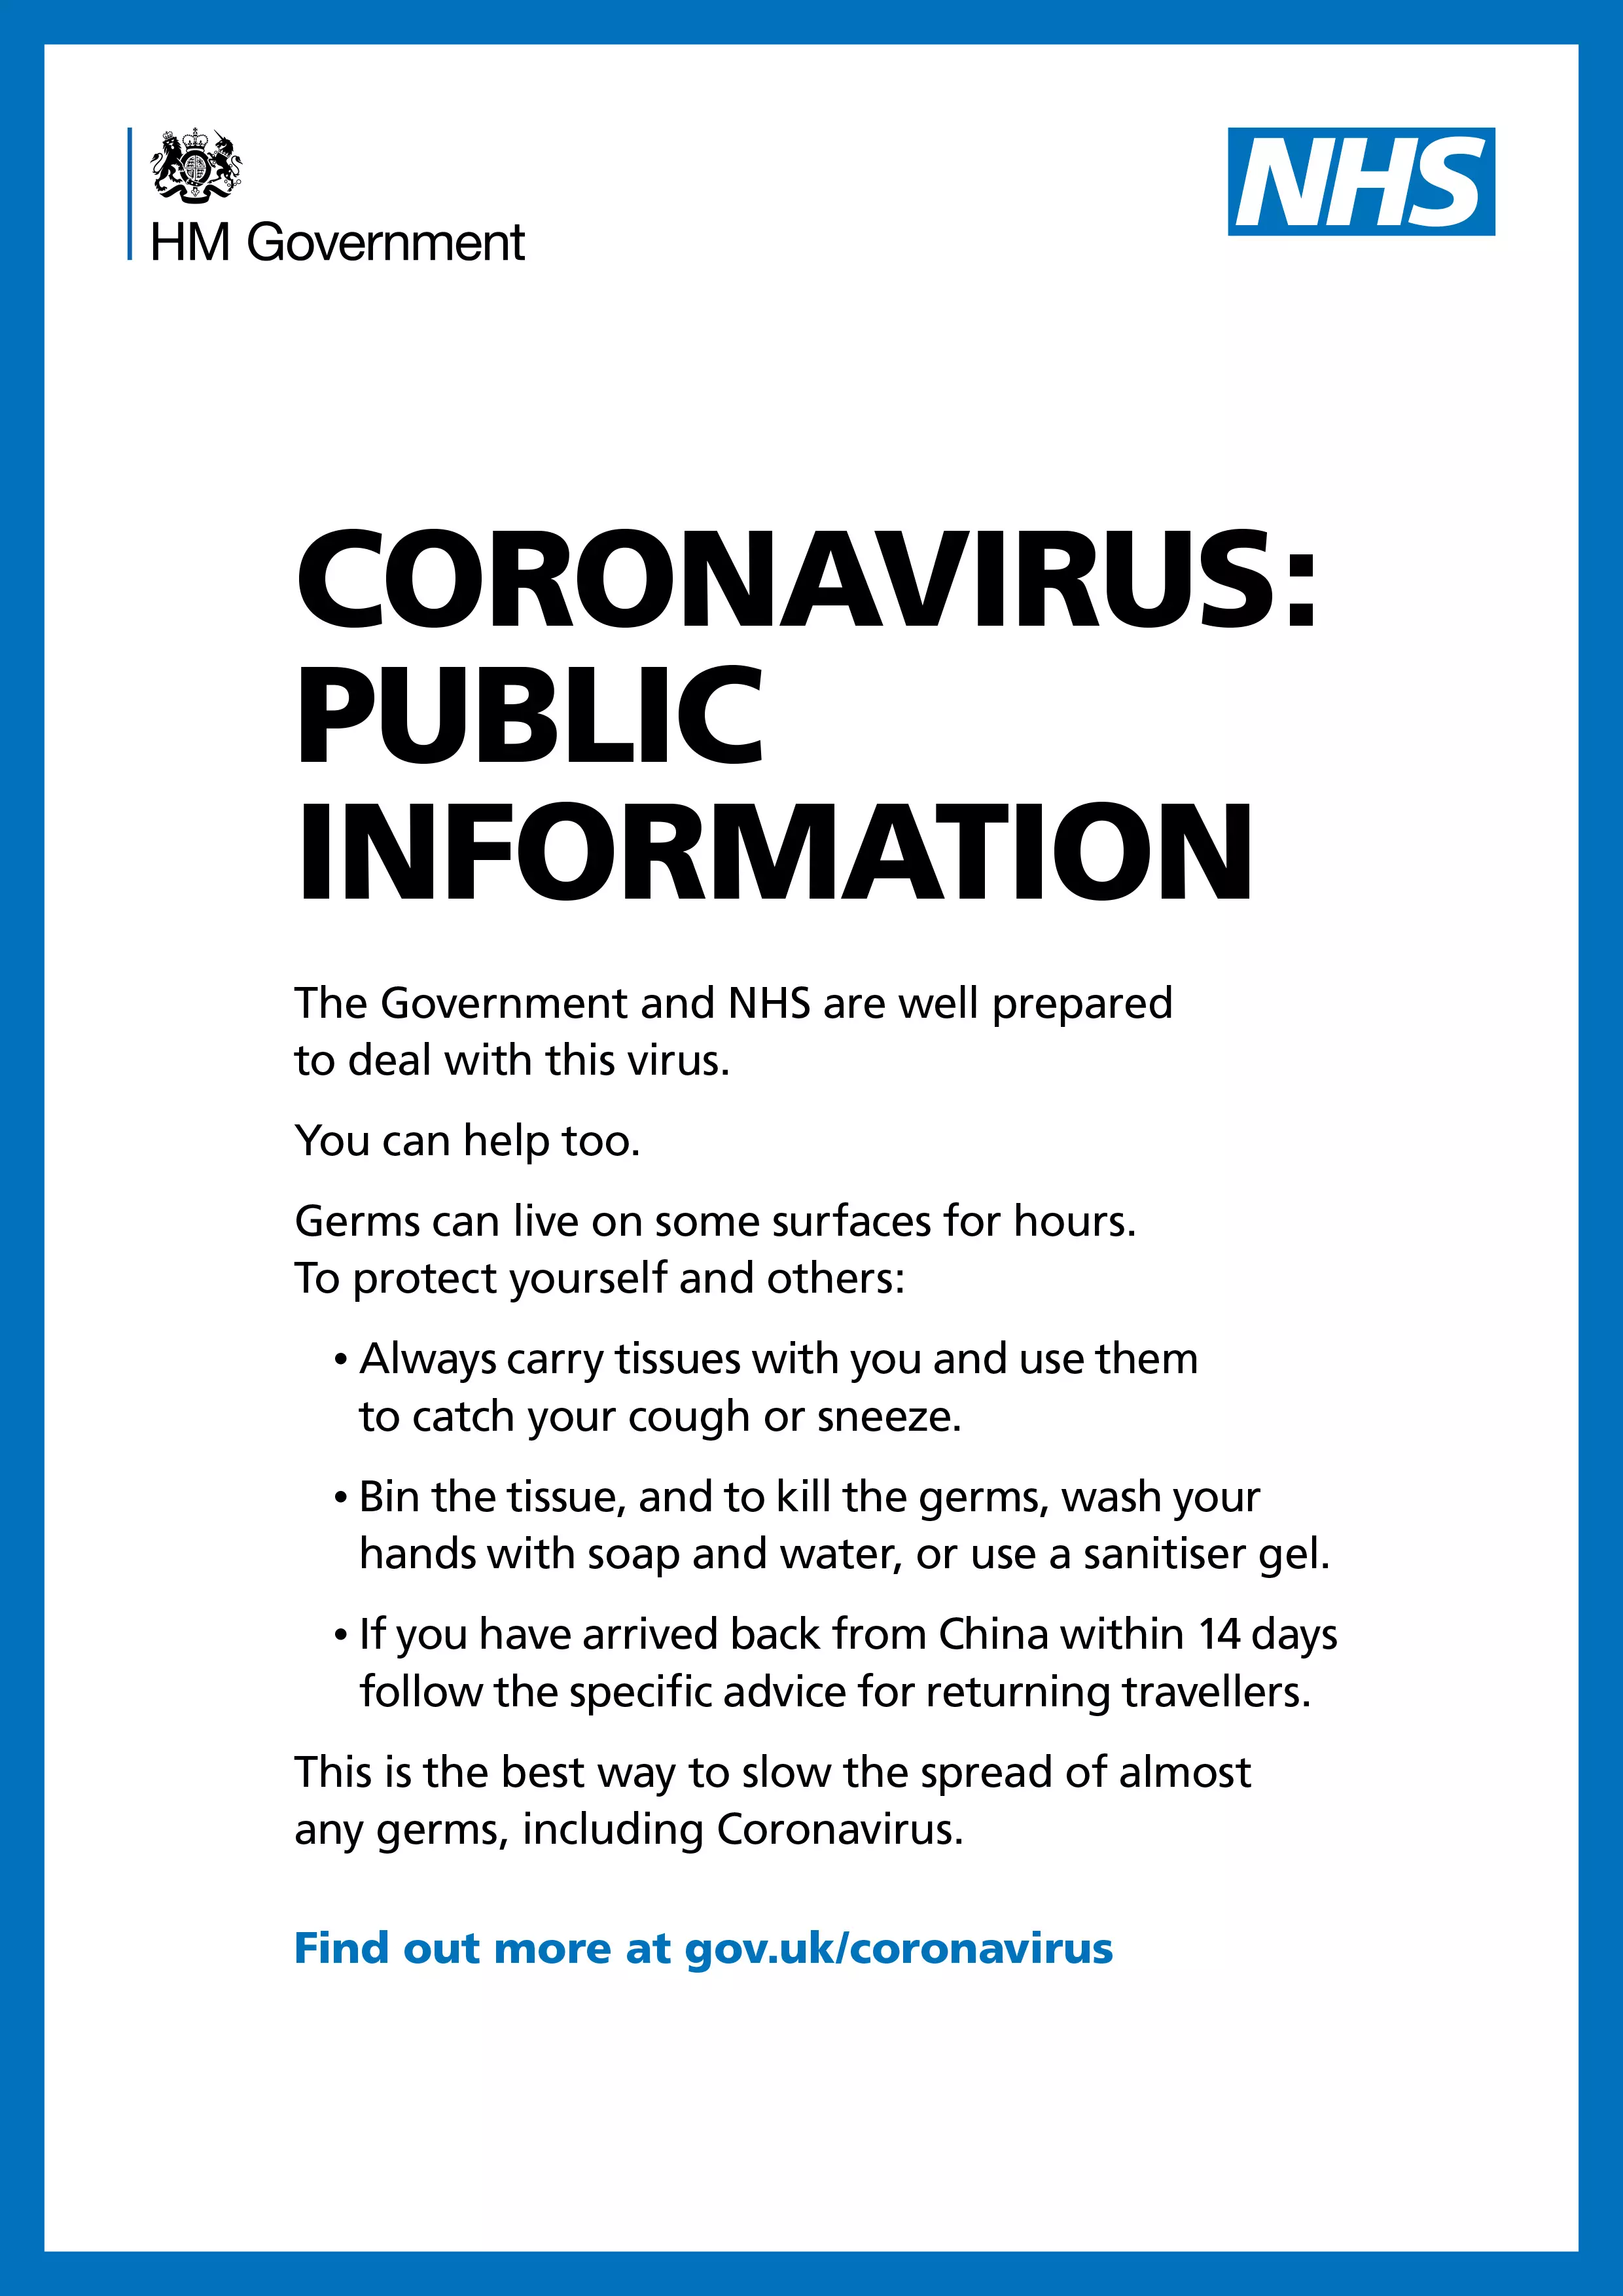 The UK has been put on alert over the spread of coronavirus.